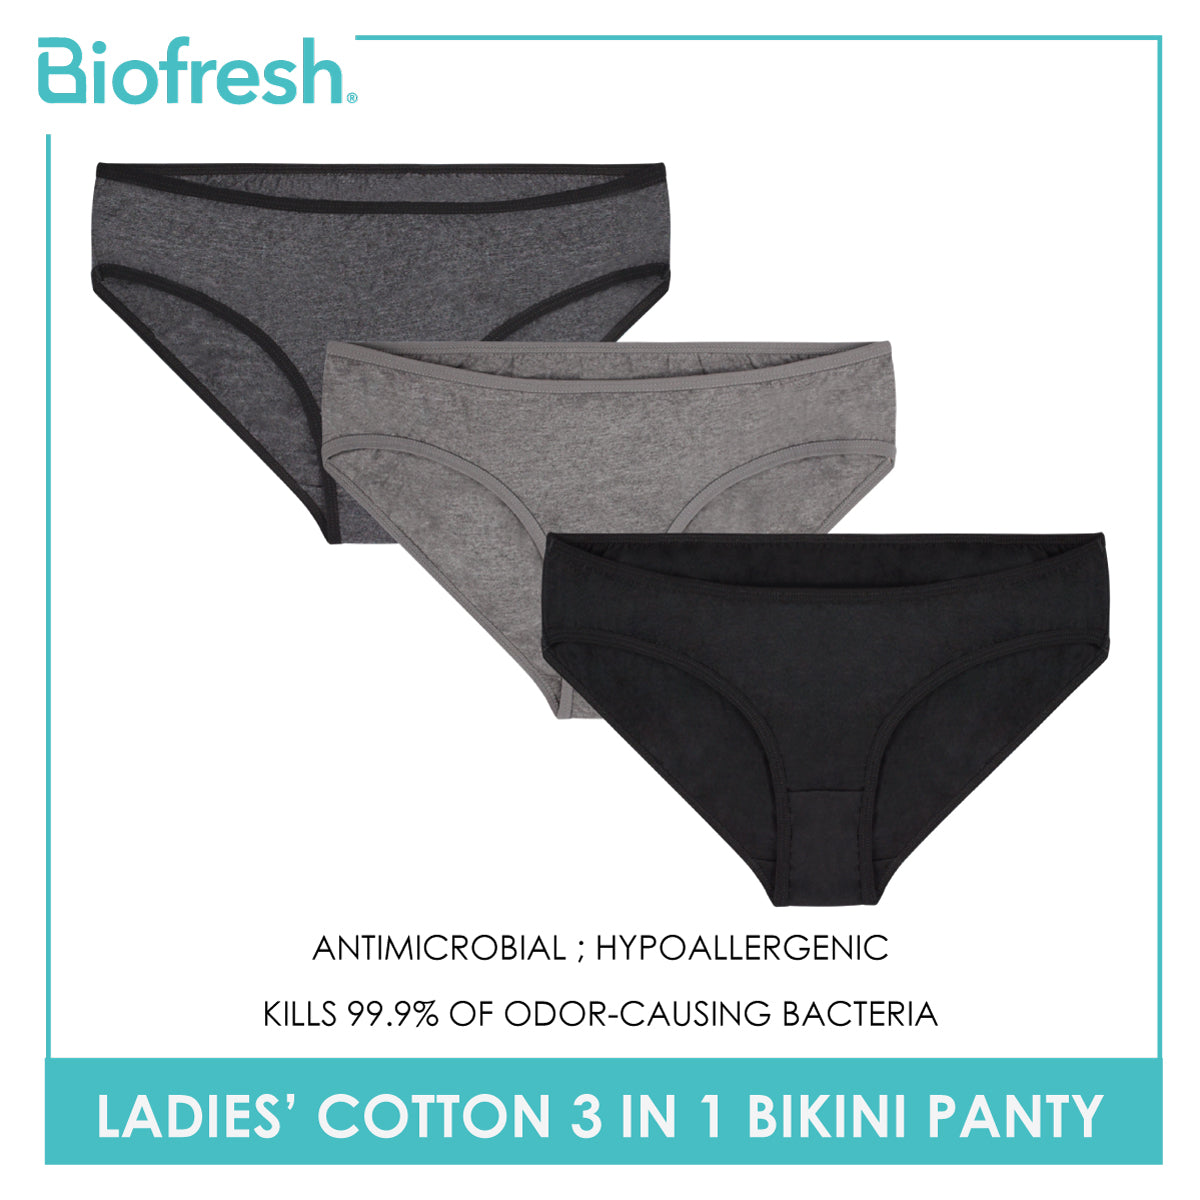 Ladies' Antimicrobial Cotton Bikini Panty Philippines